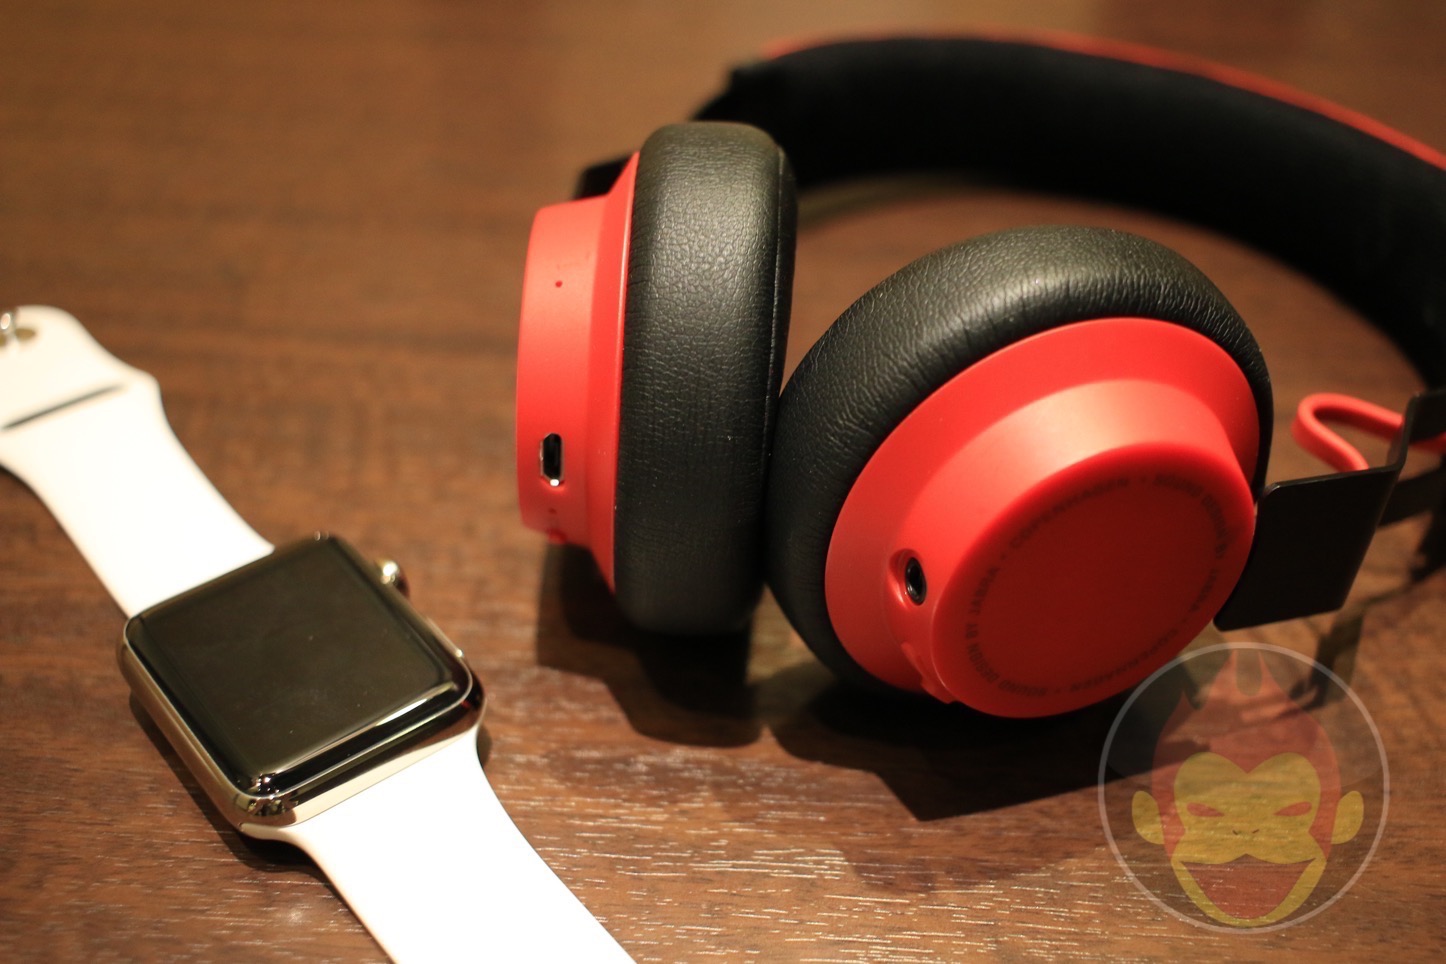 Using-Headphones-With-Apple-Watch-01.JPG